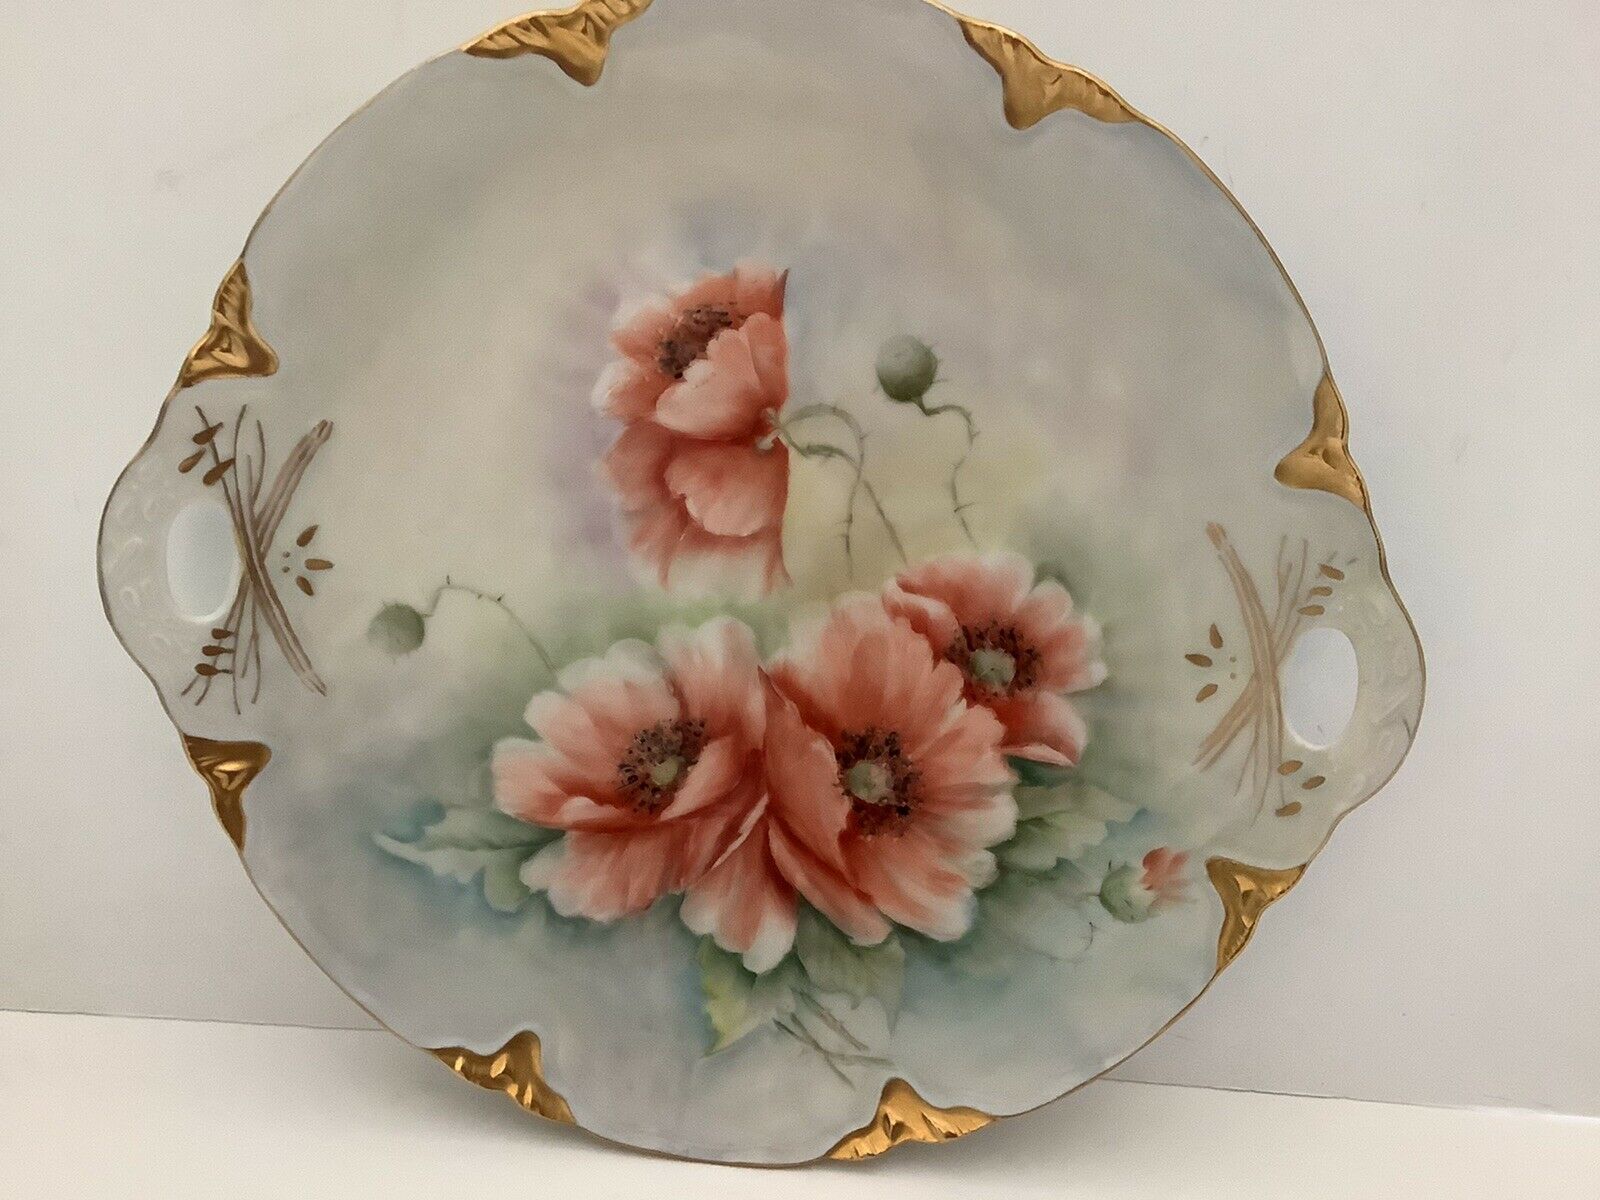 VTG Antique 11.75” Porcelain Cake Plate Handled Flowers Gold Detail Stunning!